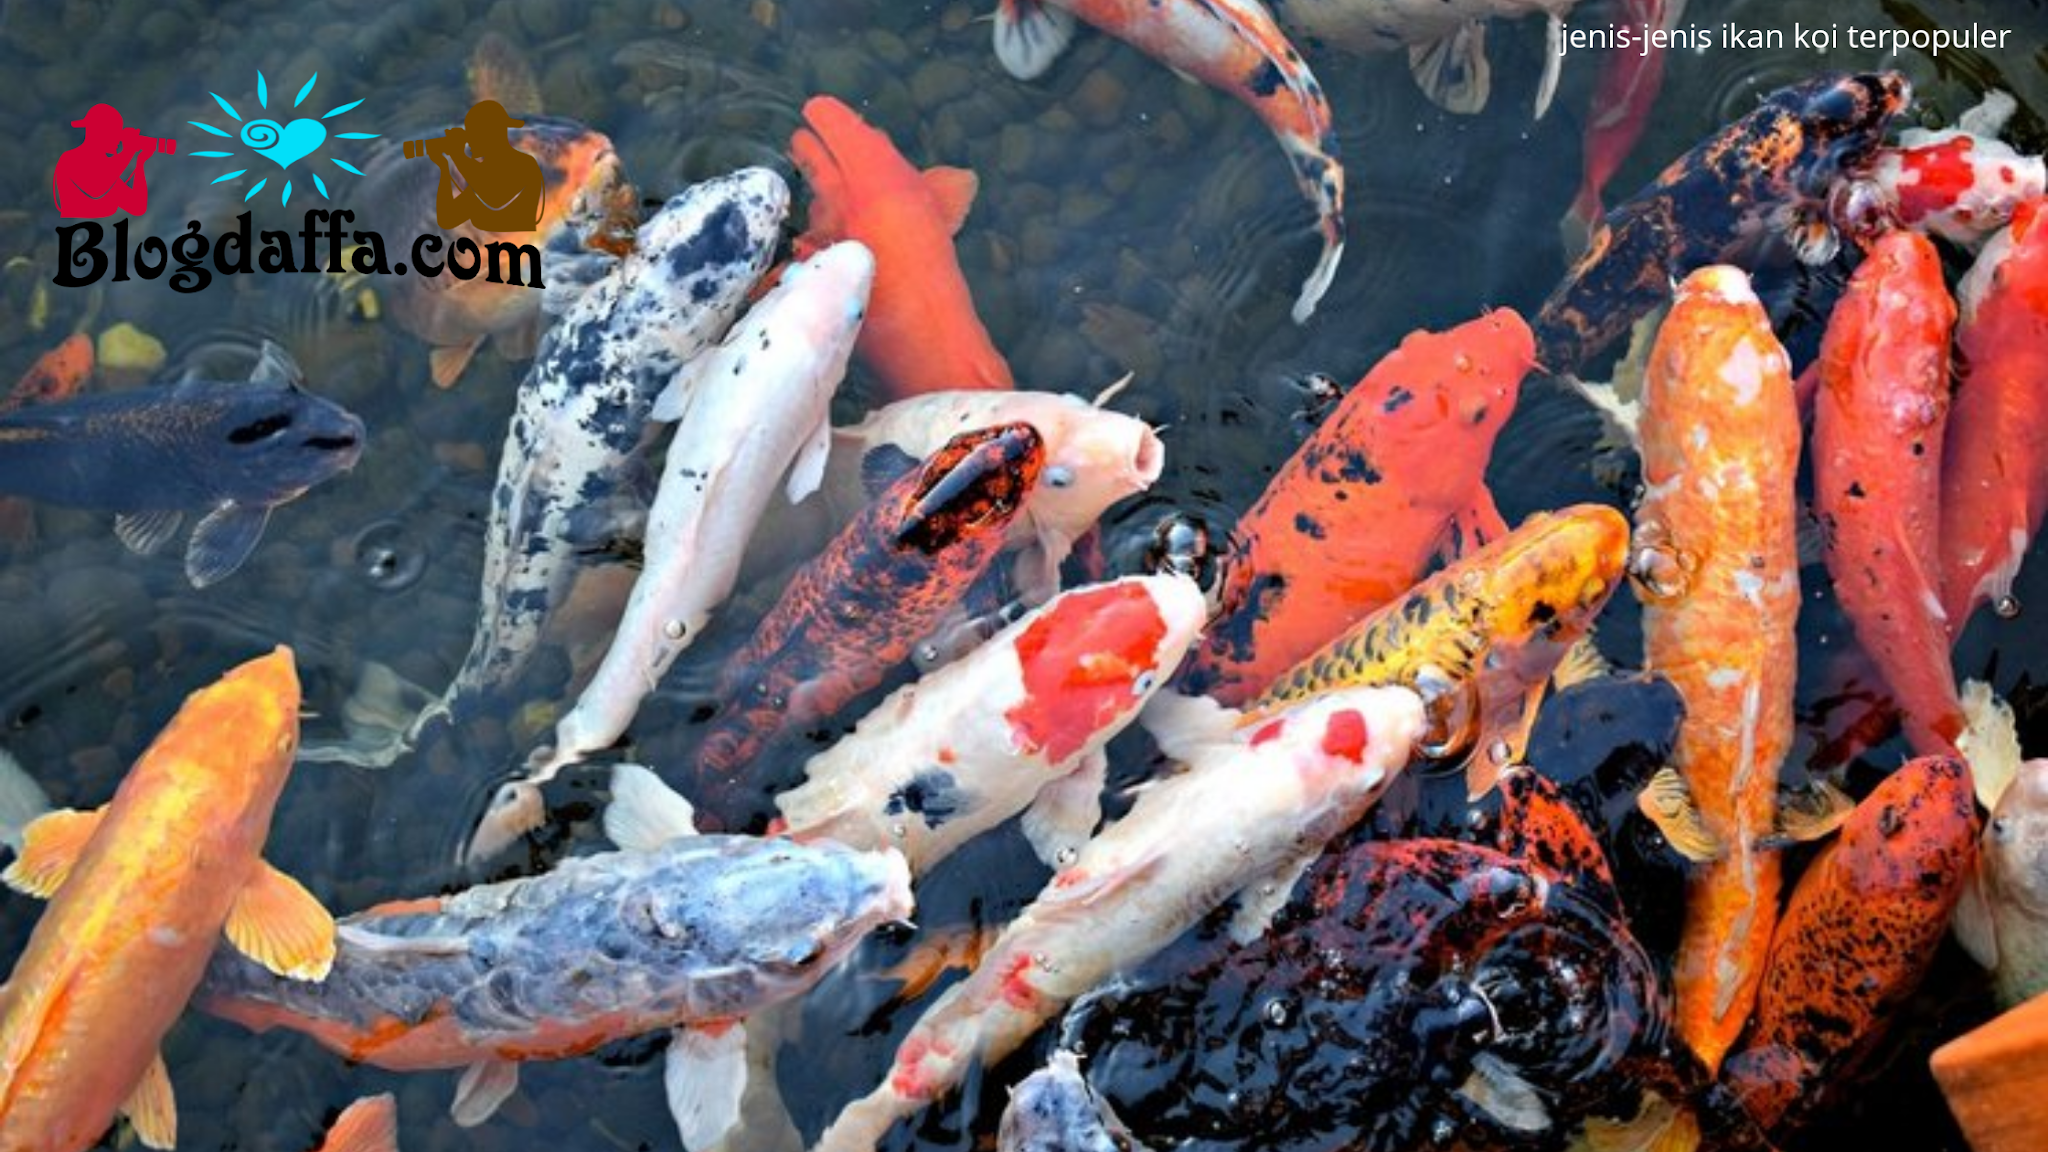 13 Jenis Ikan Koi Tercantik Yang Cocok Untuk Dipelihara Agar Rumah Menjadi Hoki Terus Blogdaffacom